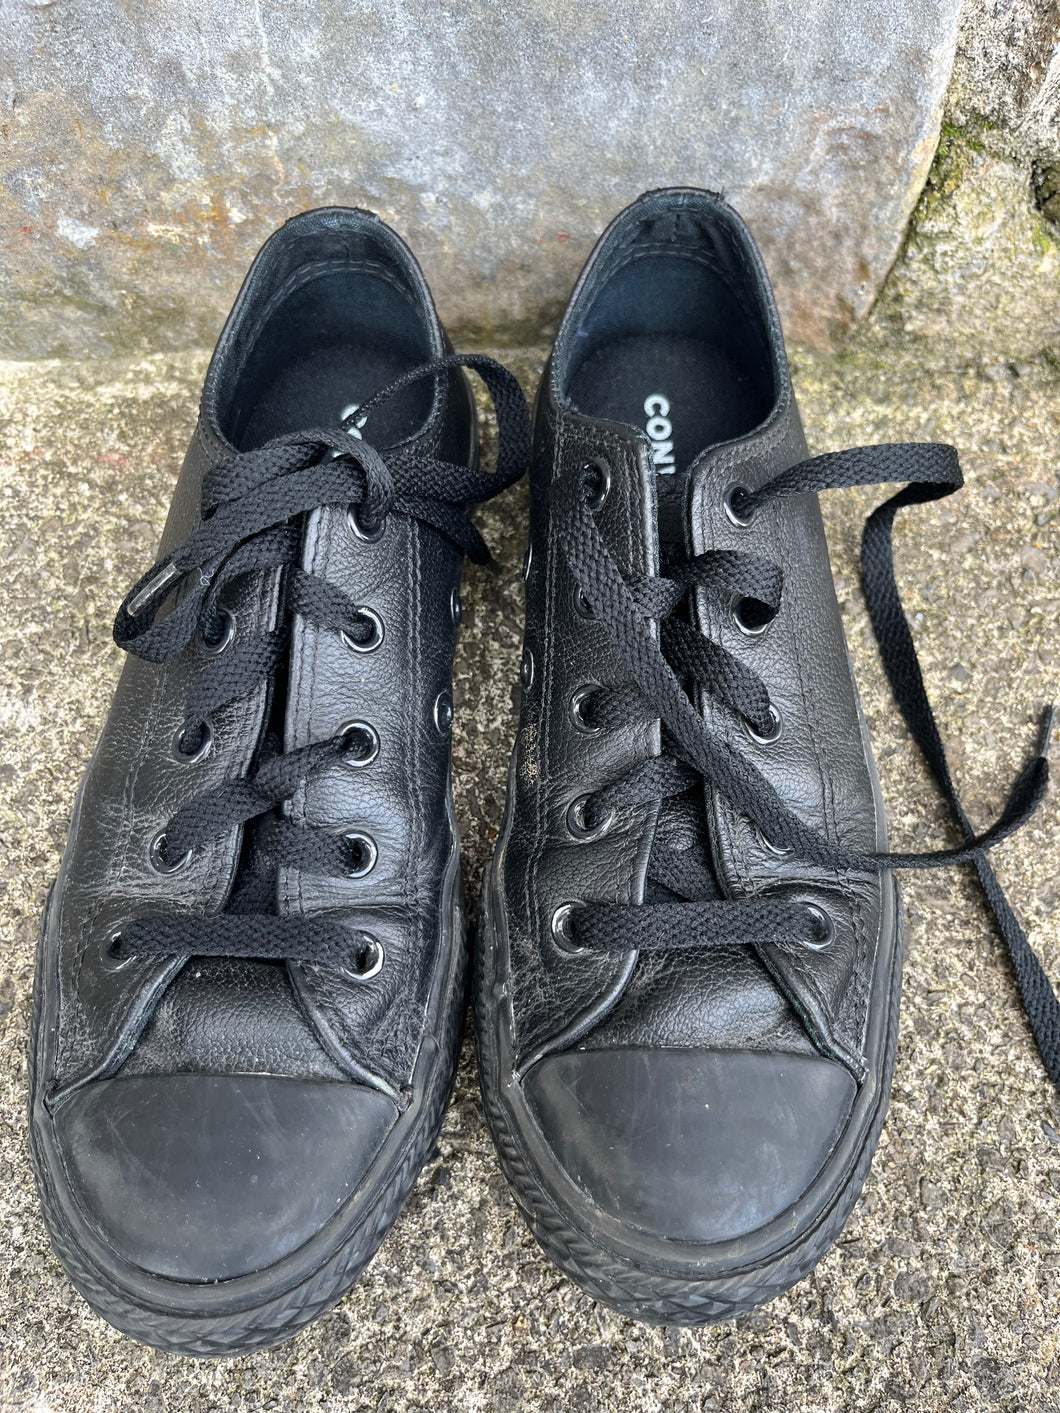 Black leather converse  uk 2 (eu 34)